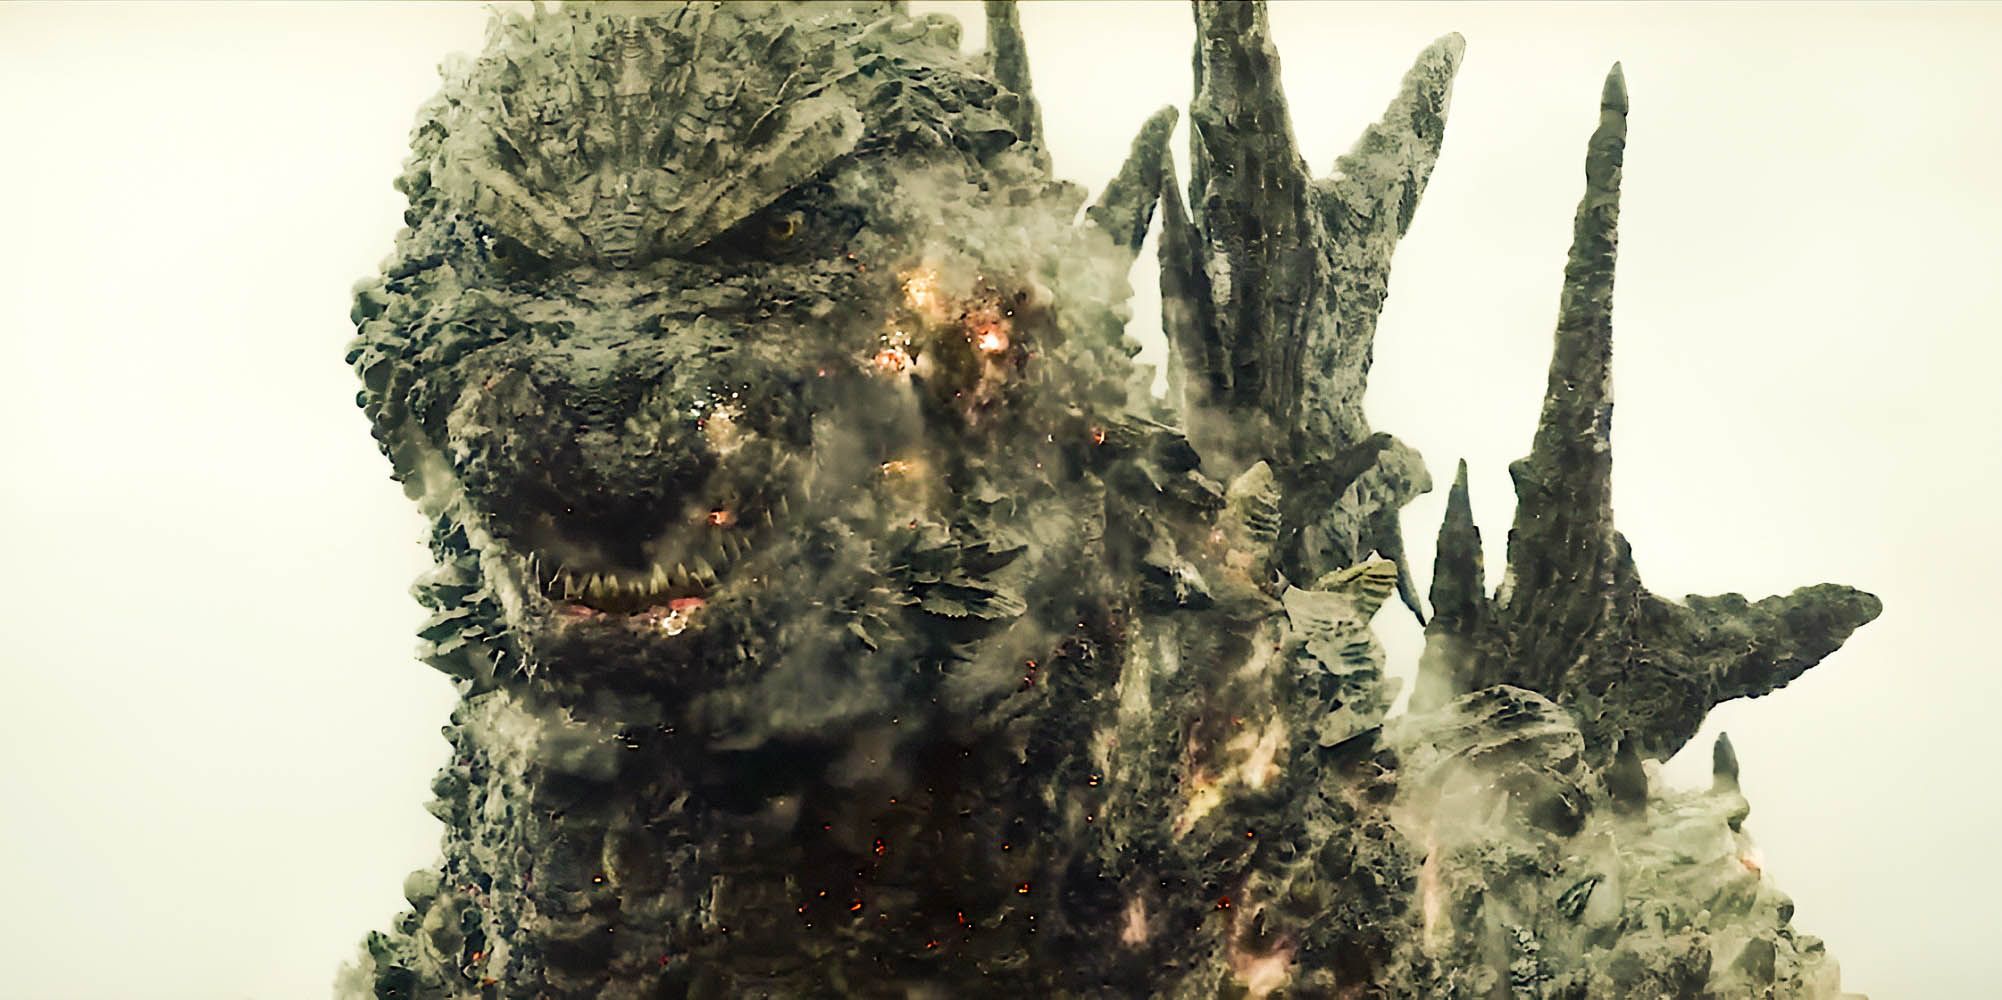 Godzilla Minus One/Minus Color выходит в цифровом формате, представлено новое видео BTS